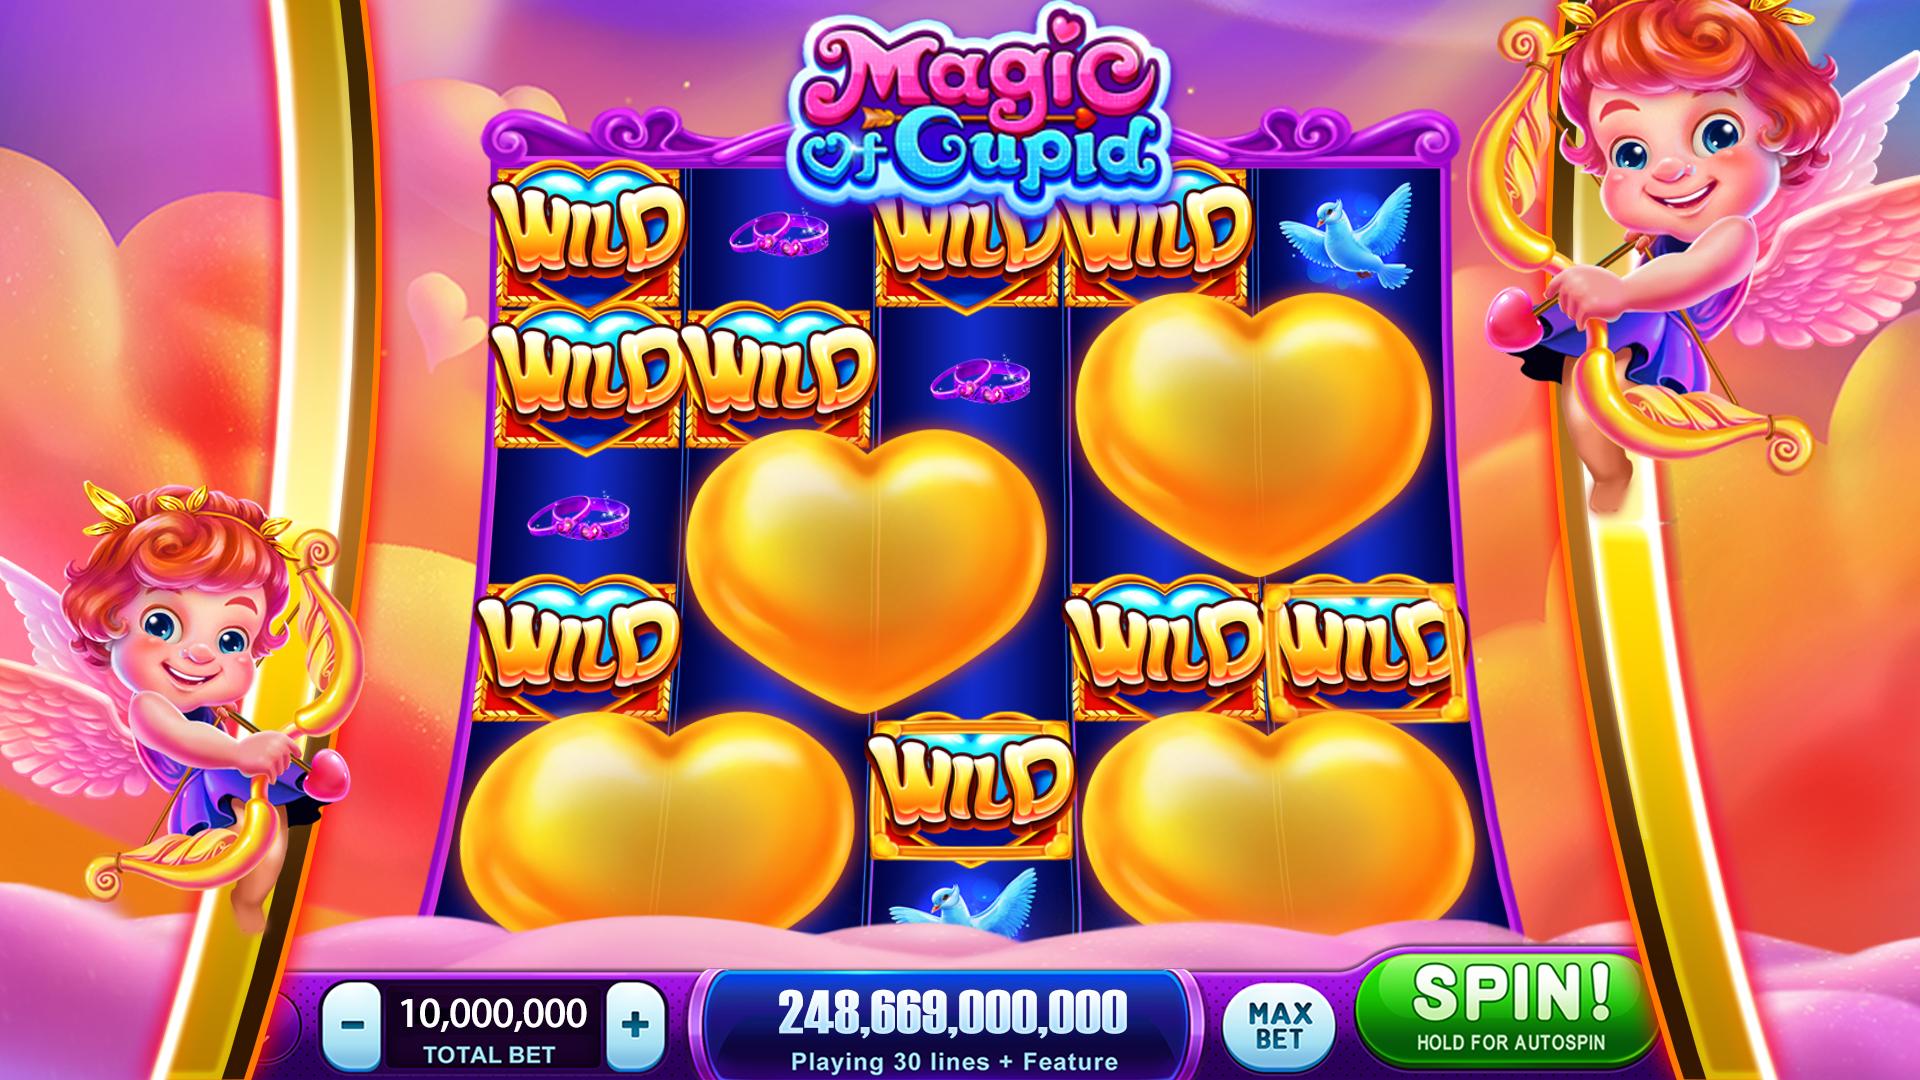 Double Win Casino Slots - Free Video Slots Games 1.61 Screenshot 4